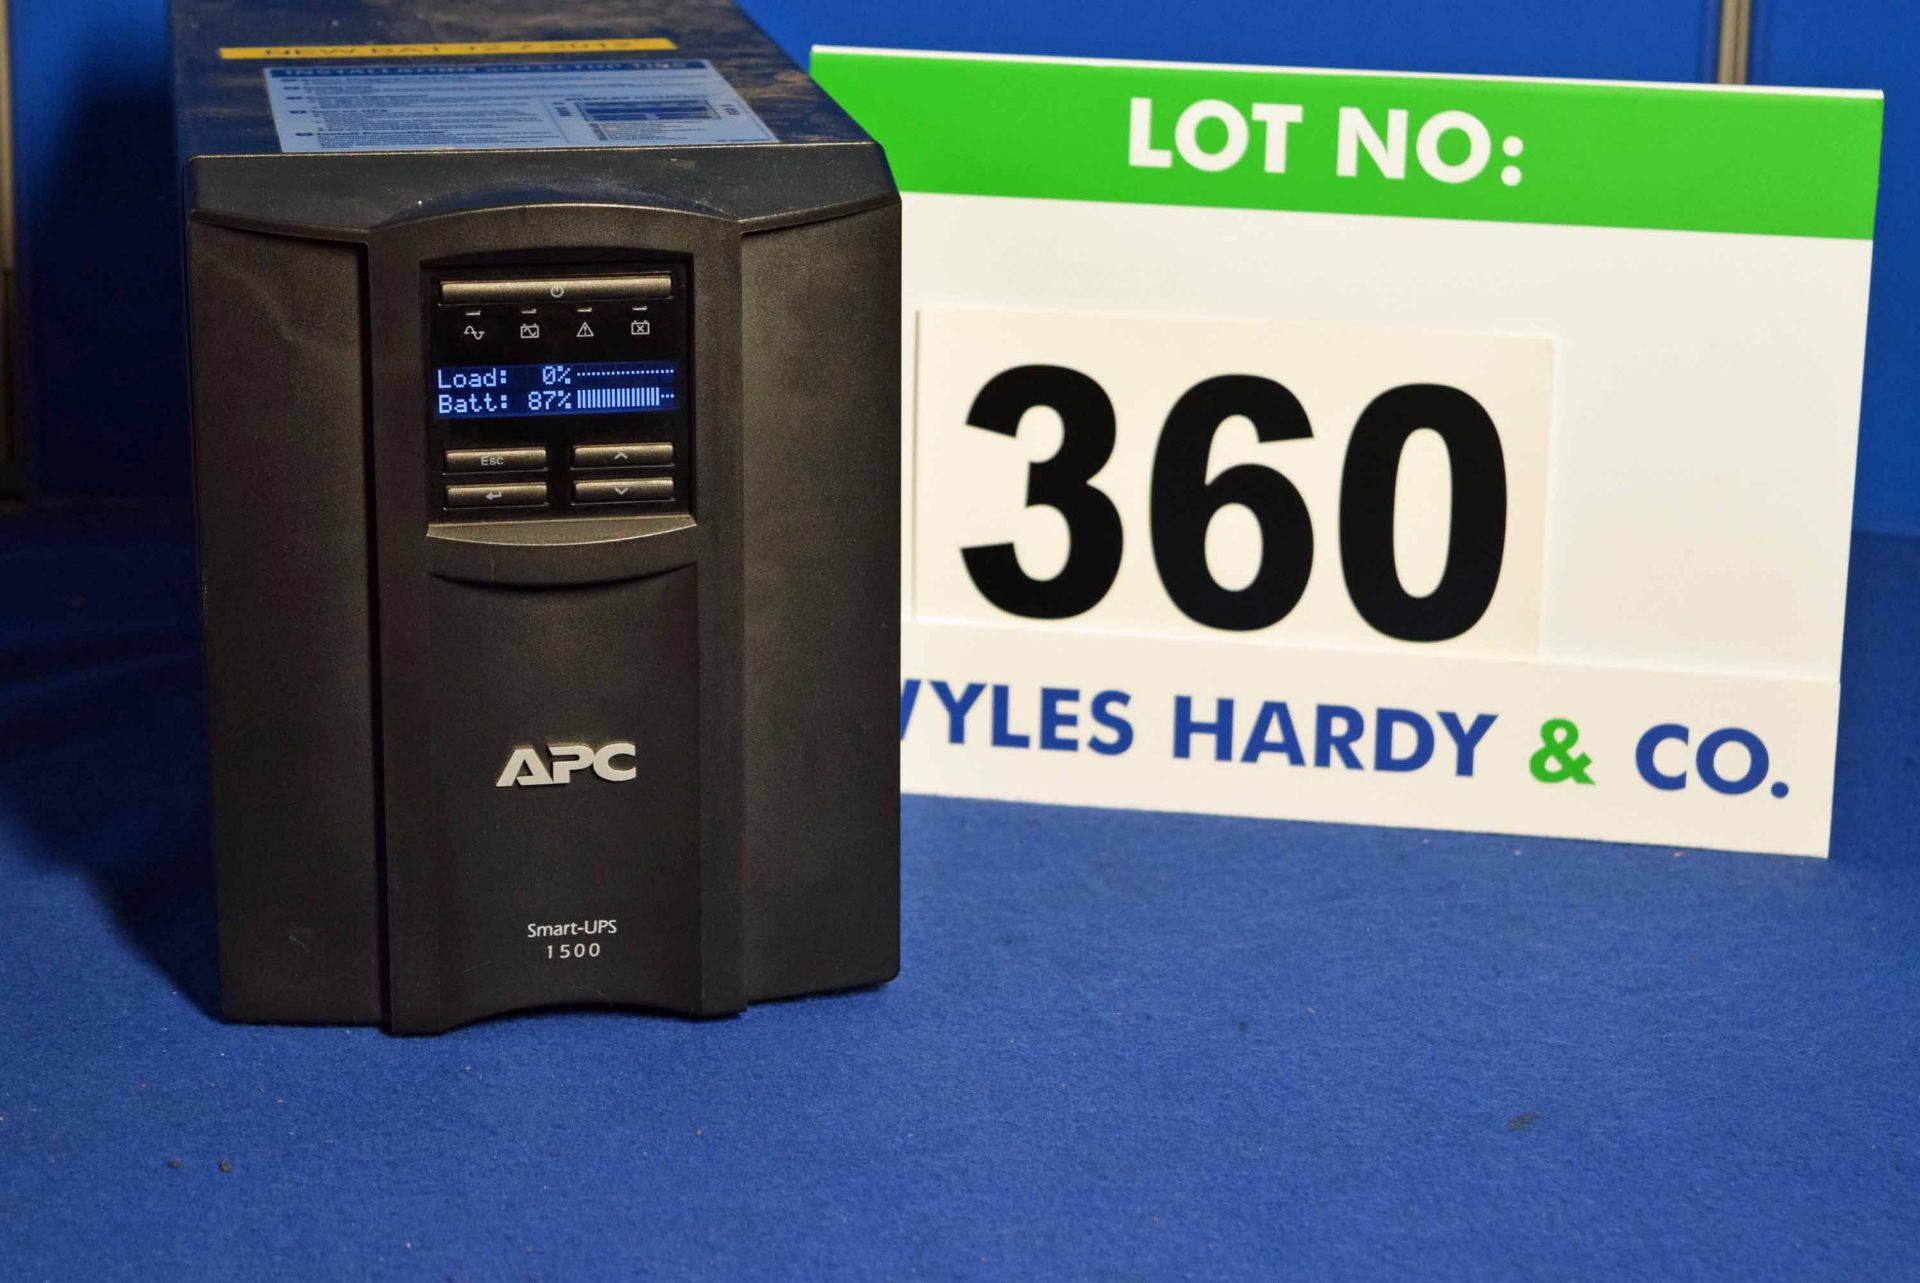 An APC SmartUPS 1500 Series Uninterruptible Power Supply